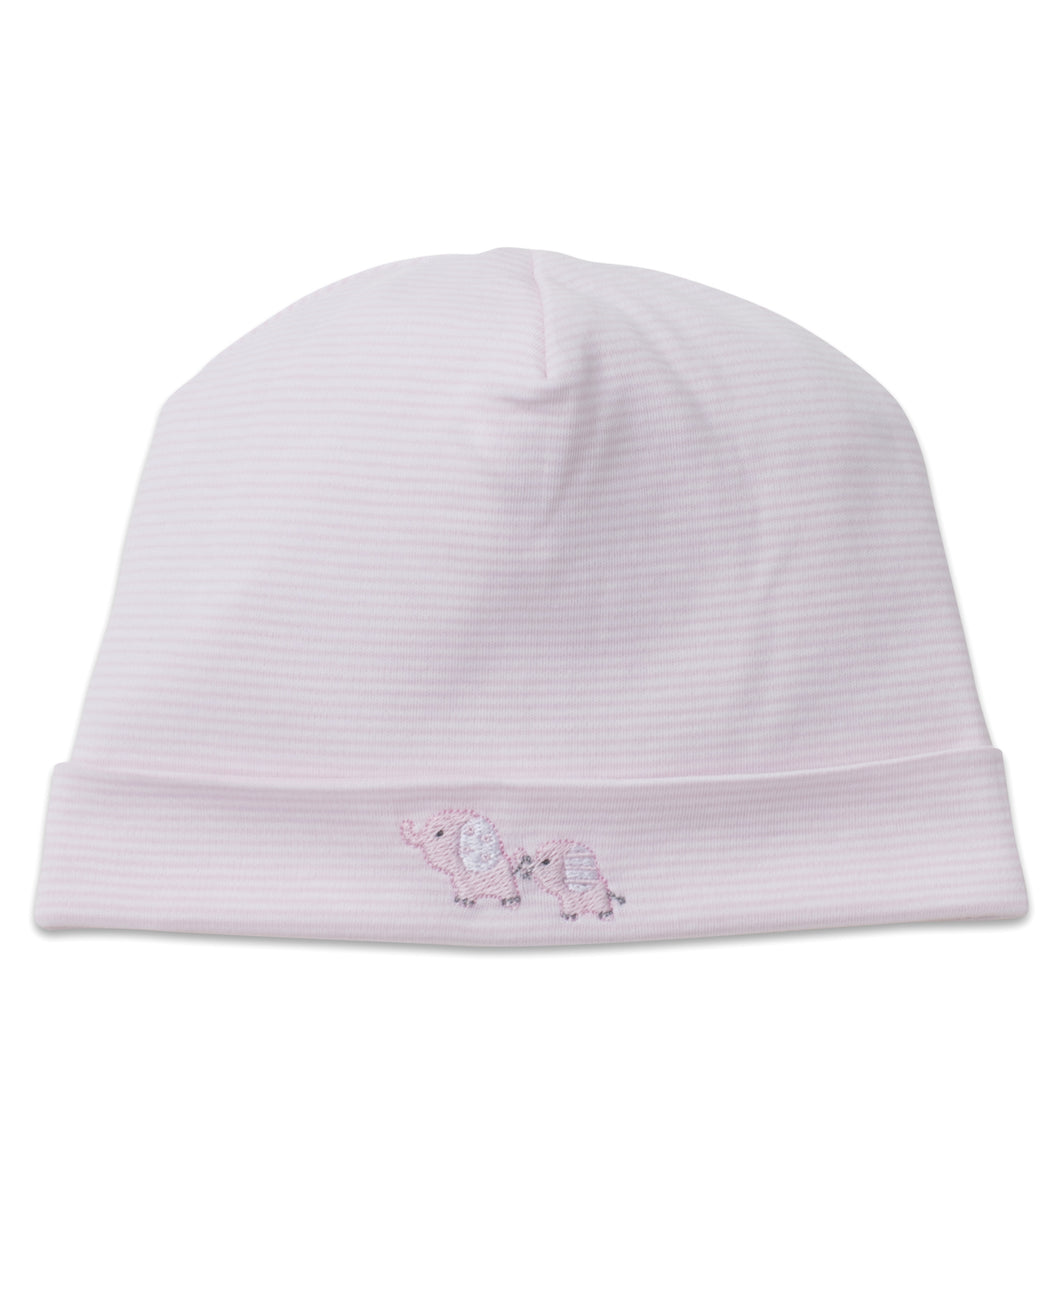 Baby Trunks Hat Str - Pink